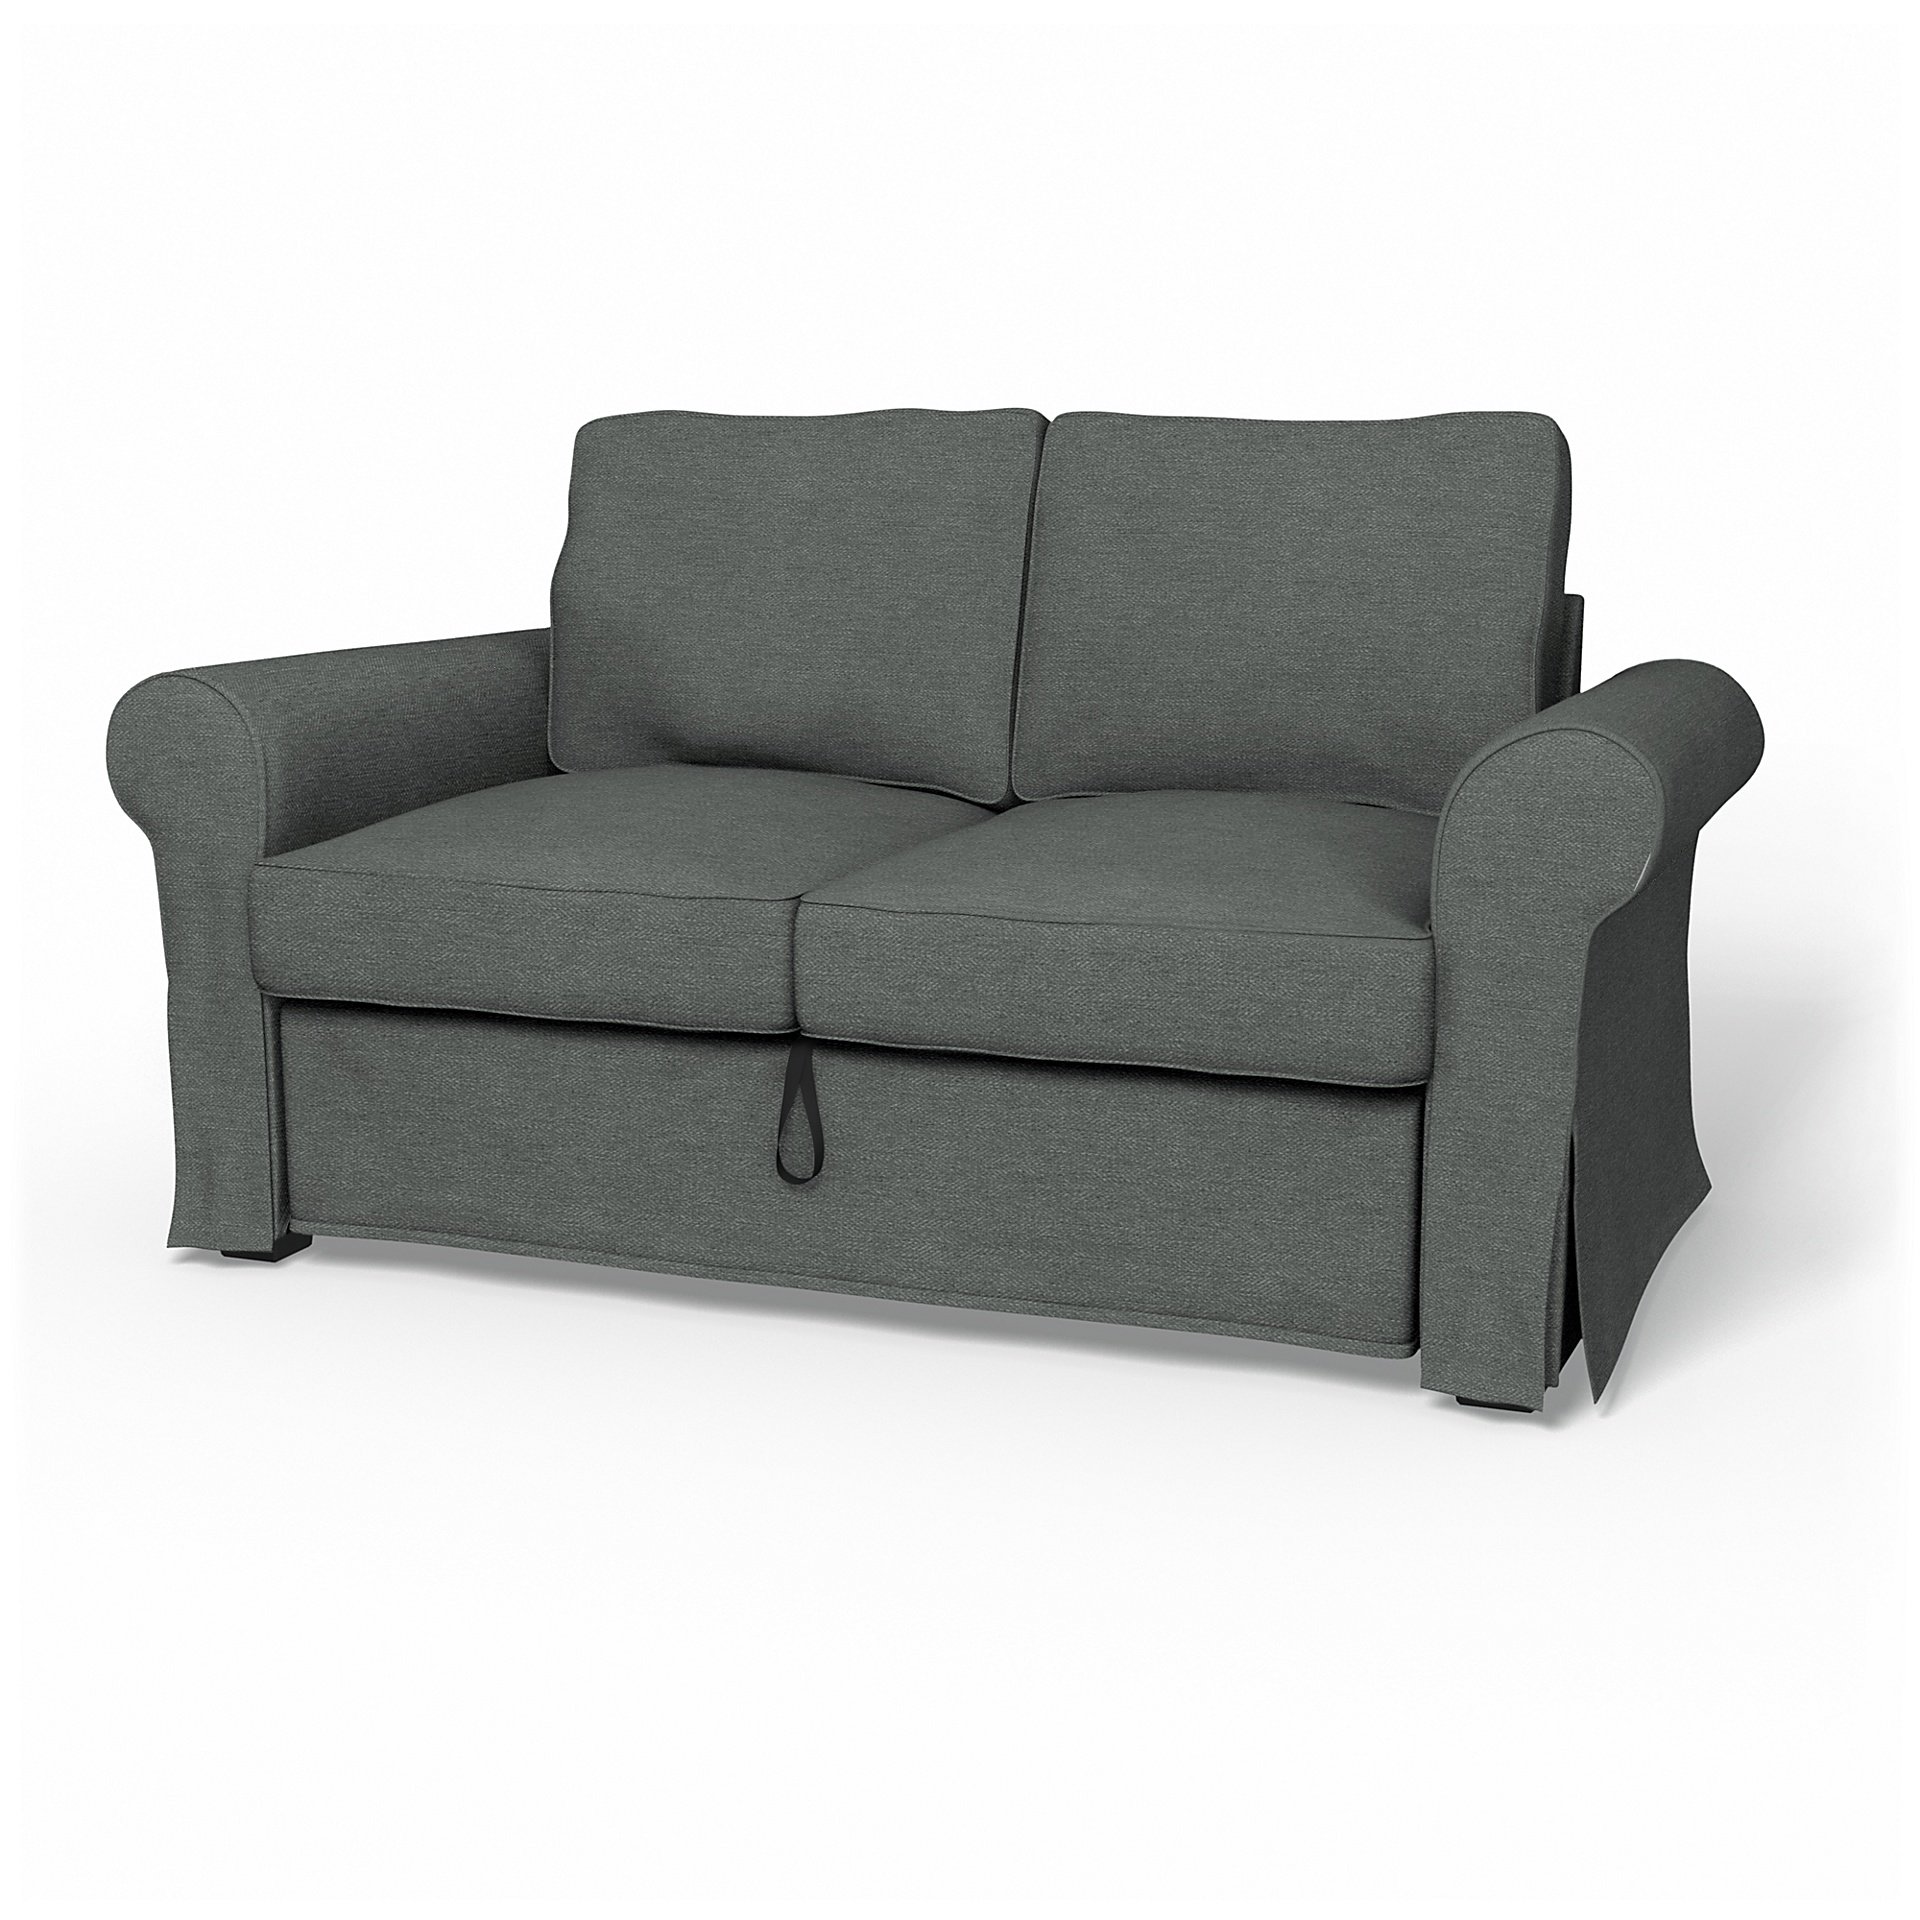 IKEA - Backabro 2 Seater Sofa Bed Cover, Laurel, Boucle & Texture - Bemz